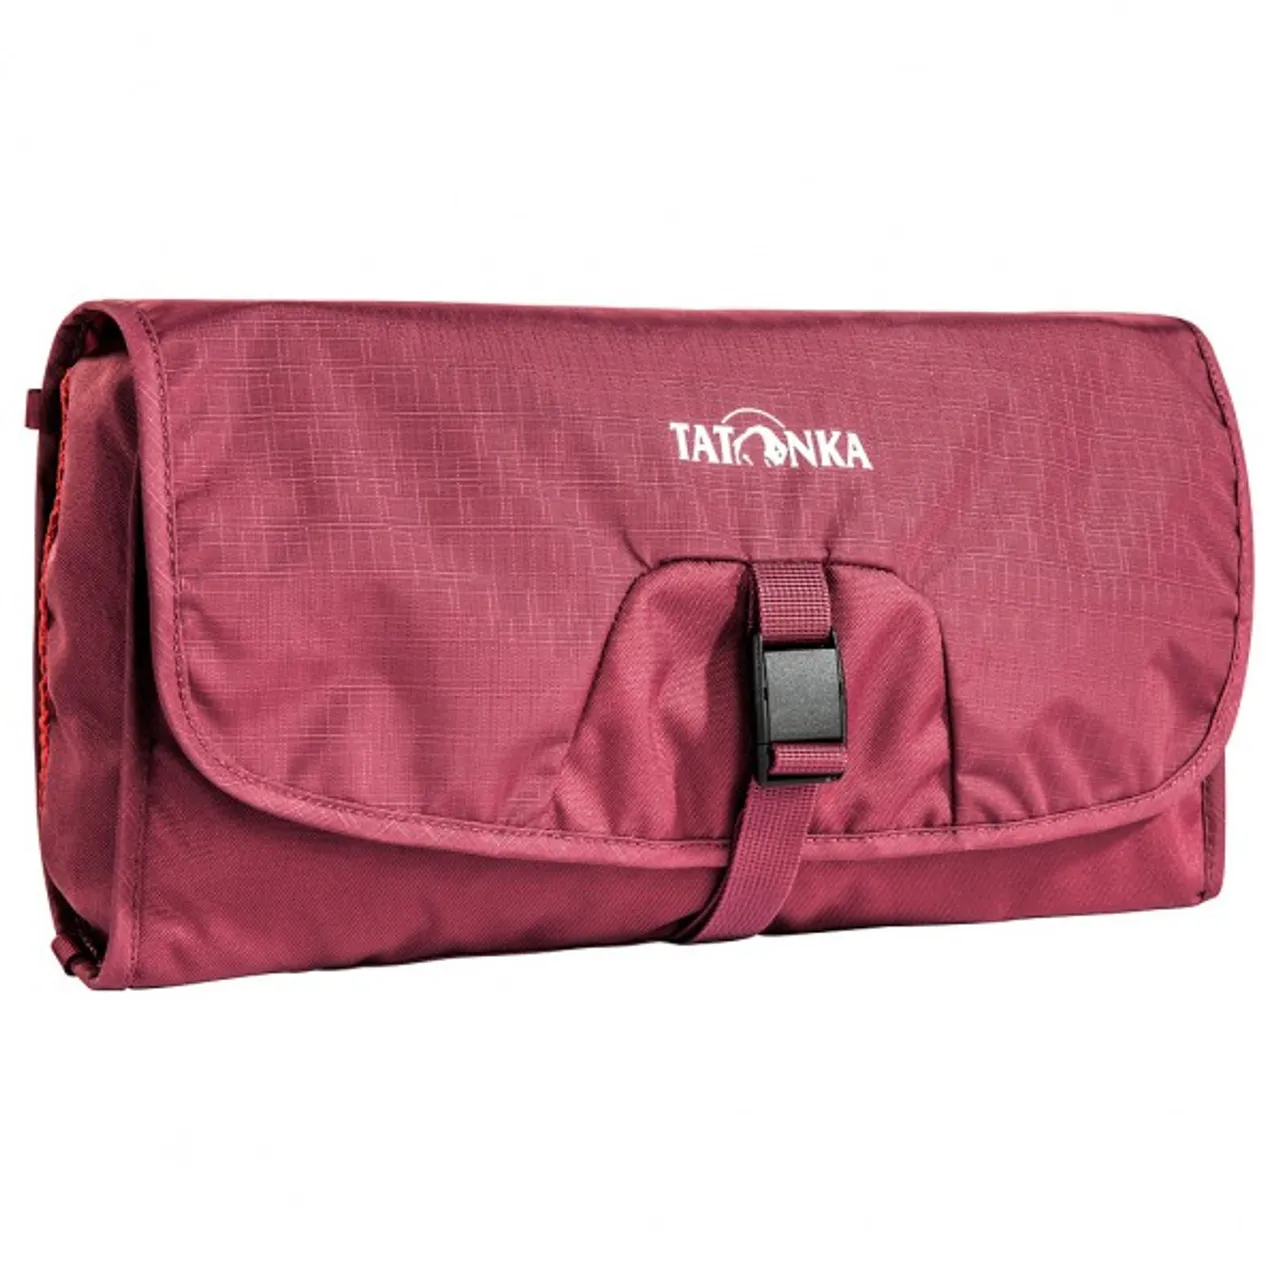 Tatonka - Travelcare - Wash bag size One Size, red